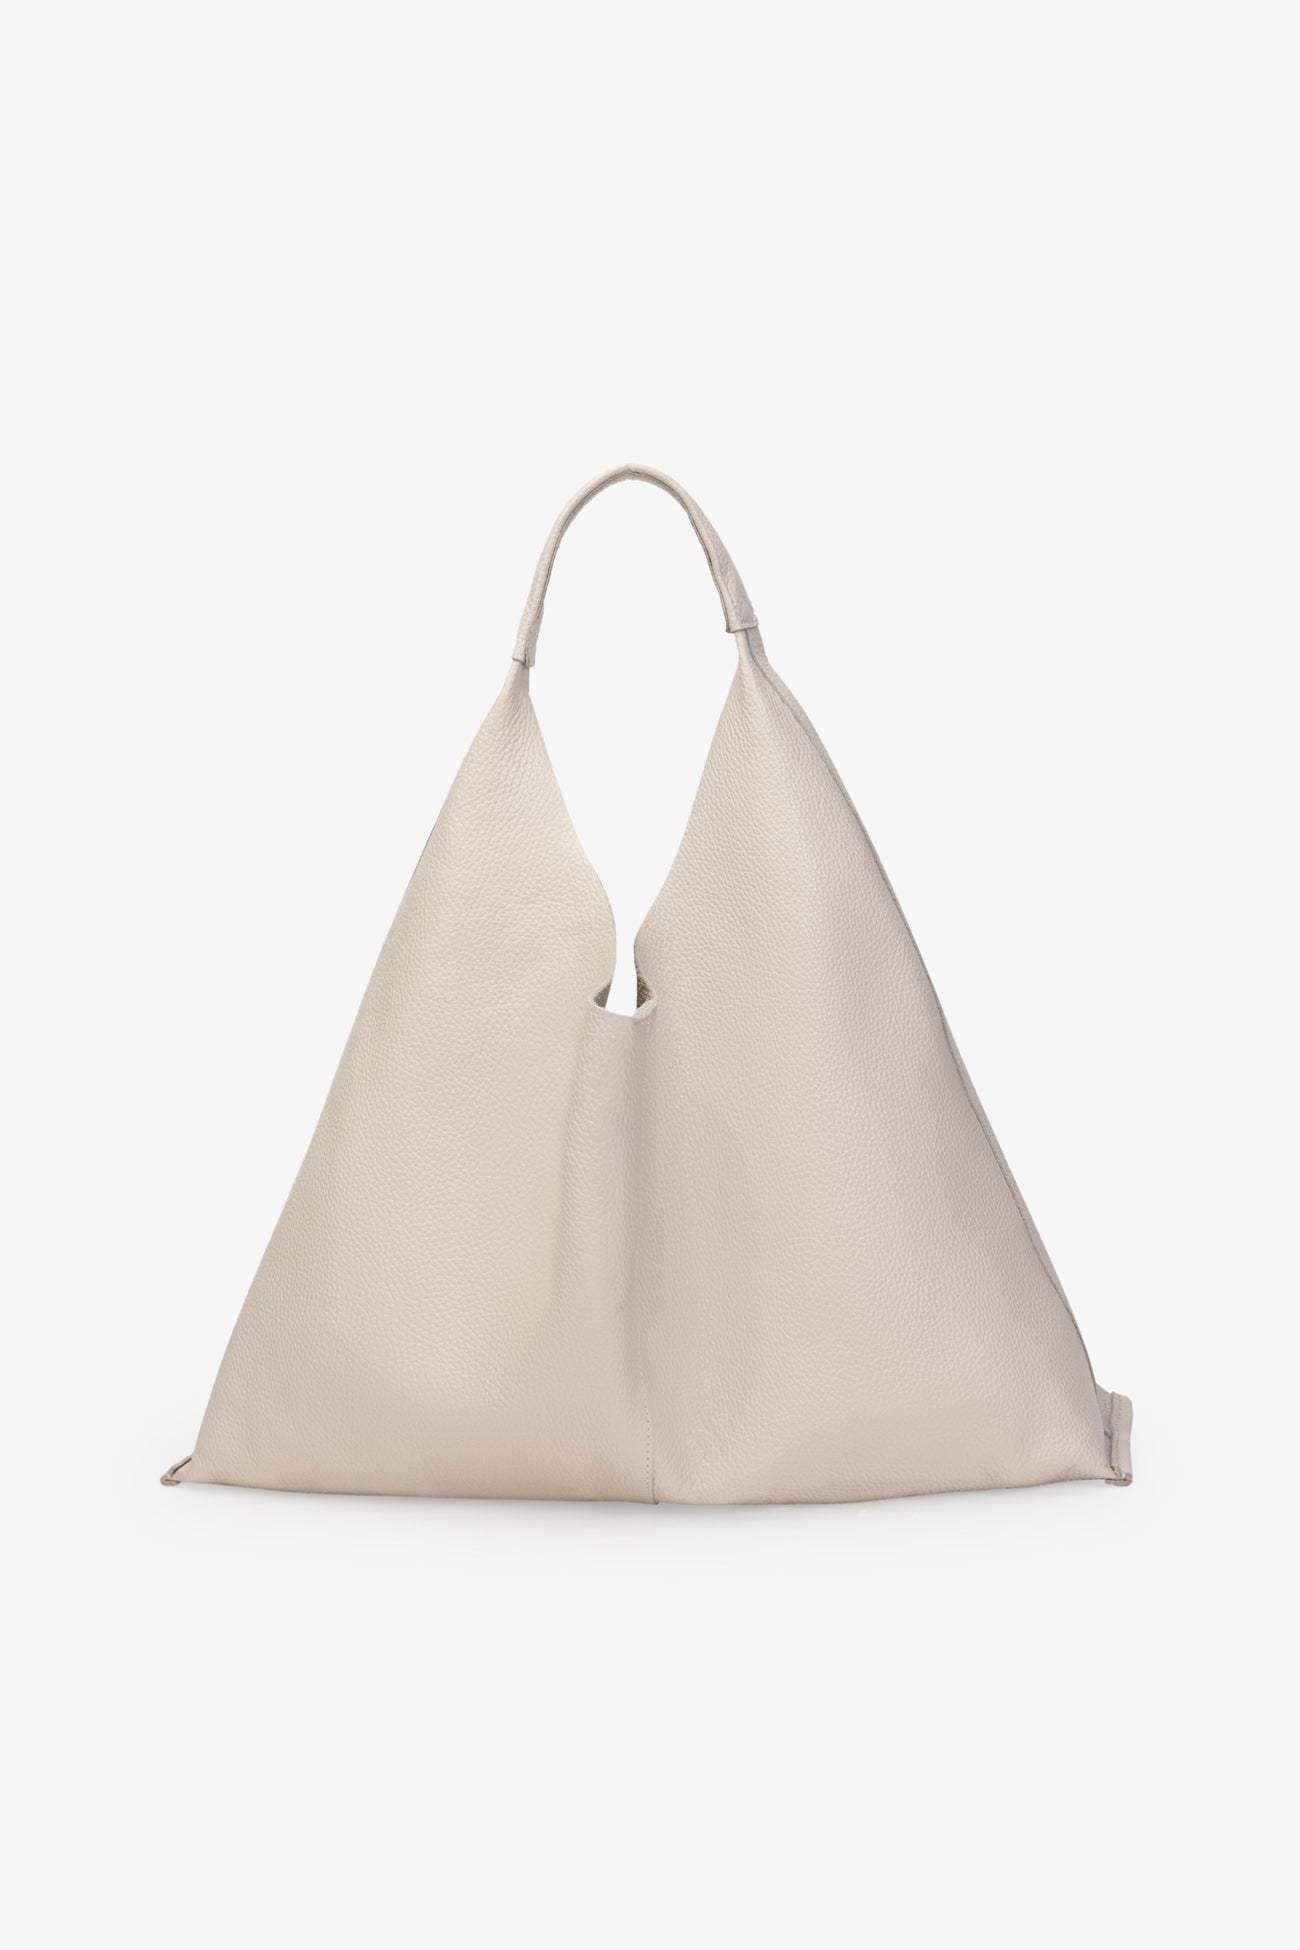 Oversized White Triangle Tote Bag - Kelly Tote | Marcella